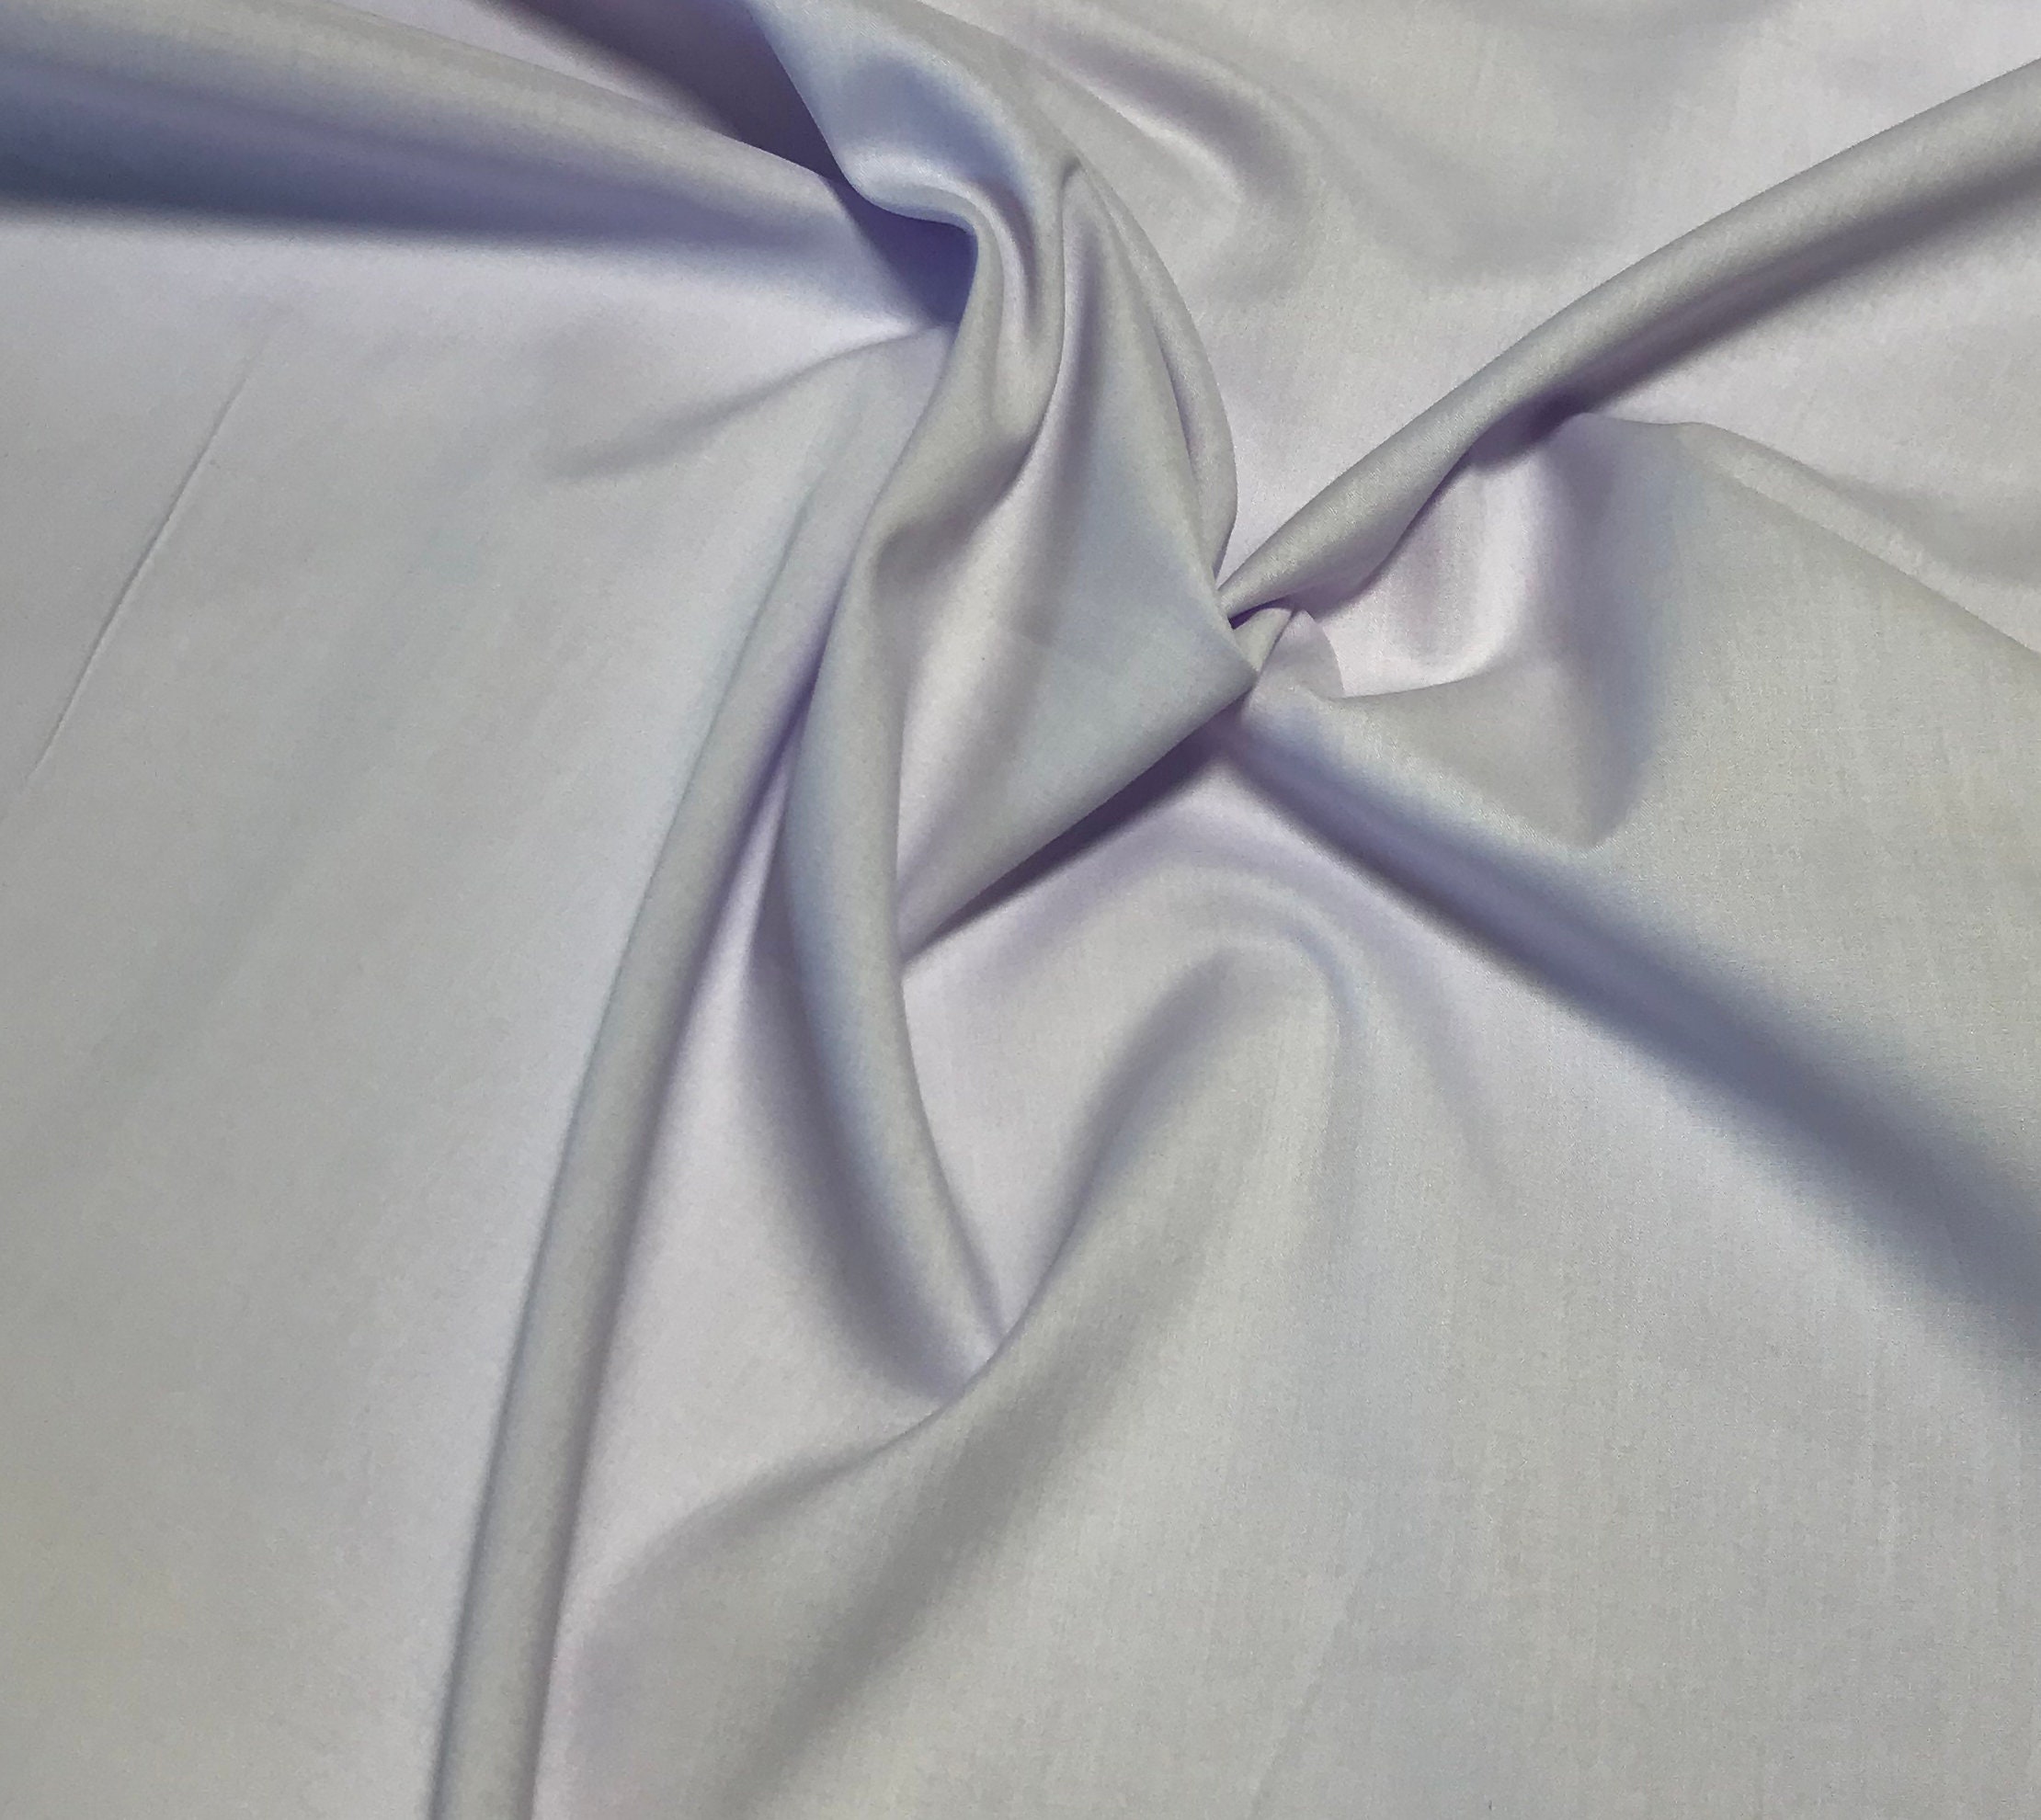 Spechler-vogel Fabric Lavender Imperial Batiste Poly/cotton Fabric